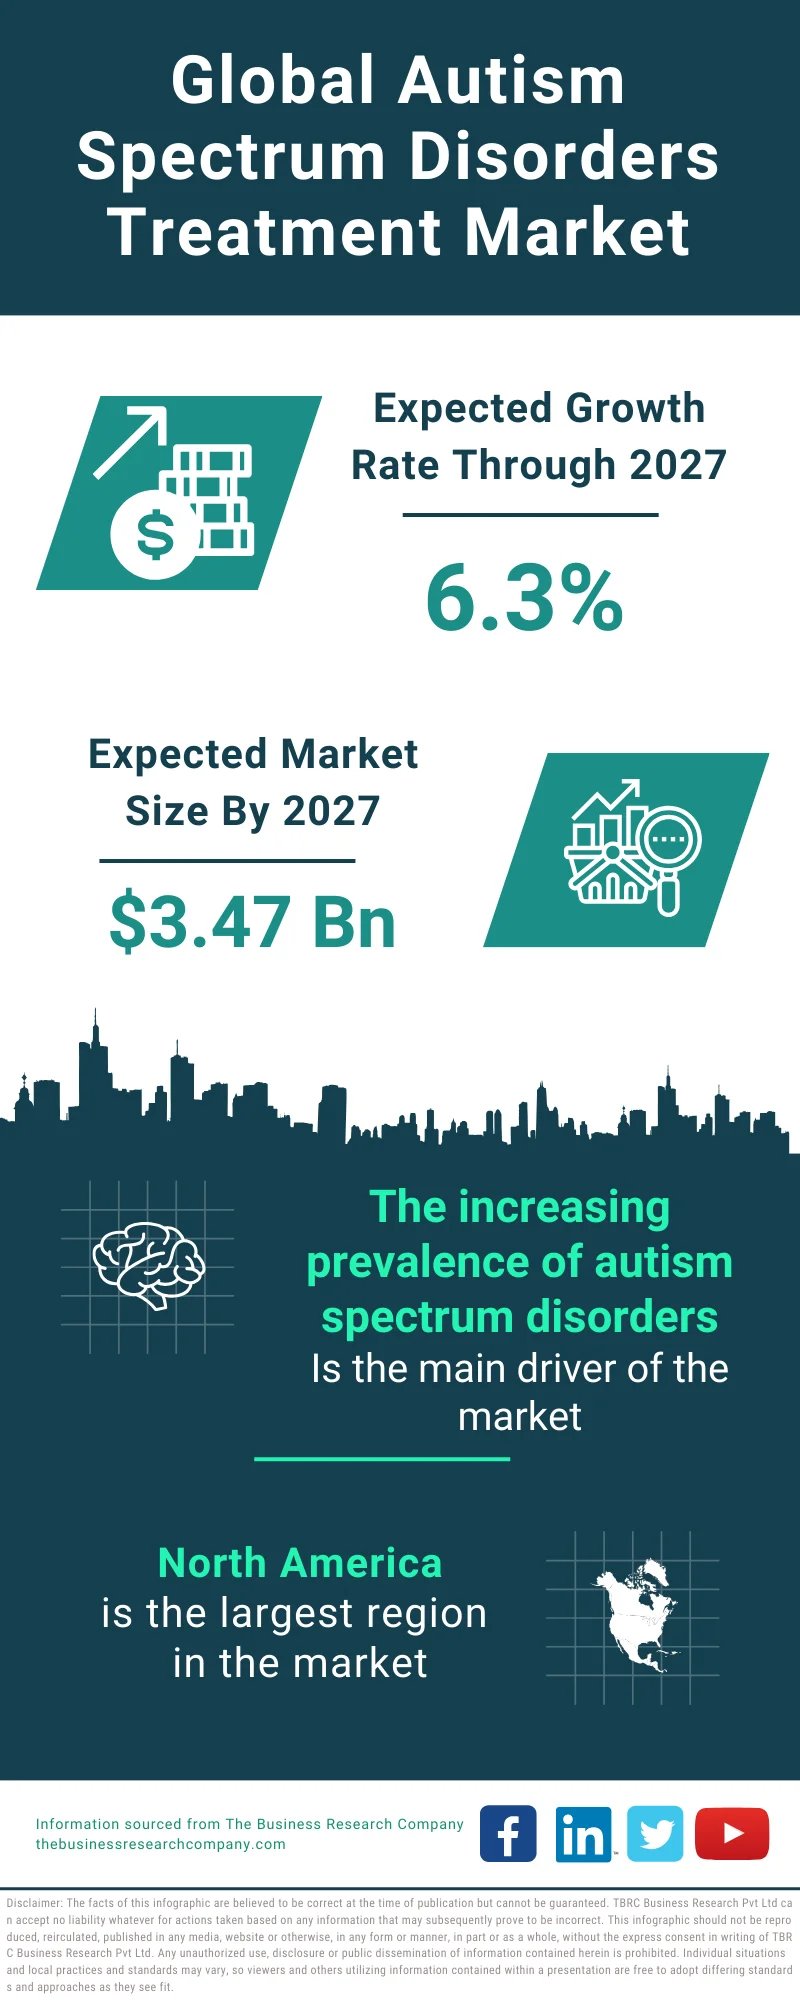 Autism Spectrum Disorders Treatment Global Market Report 2023